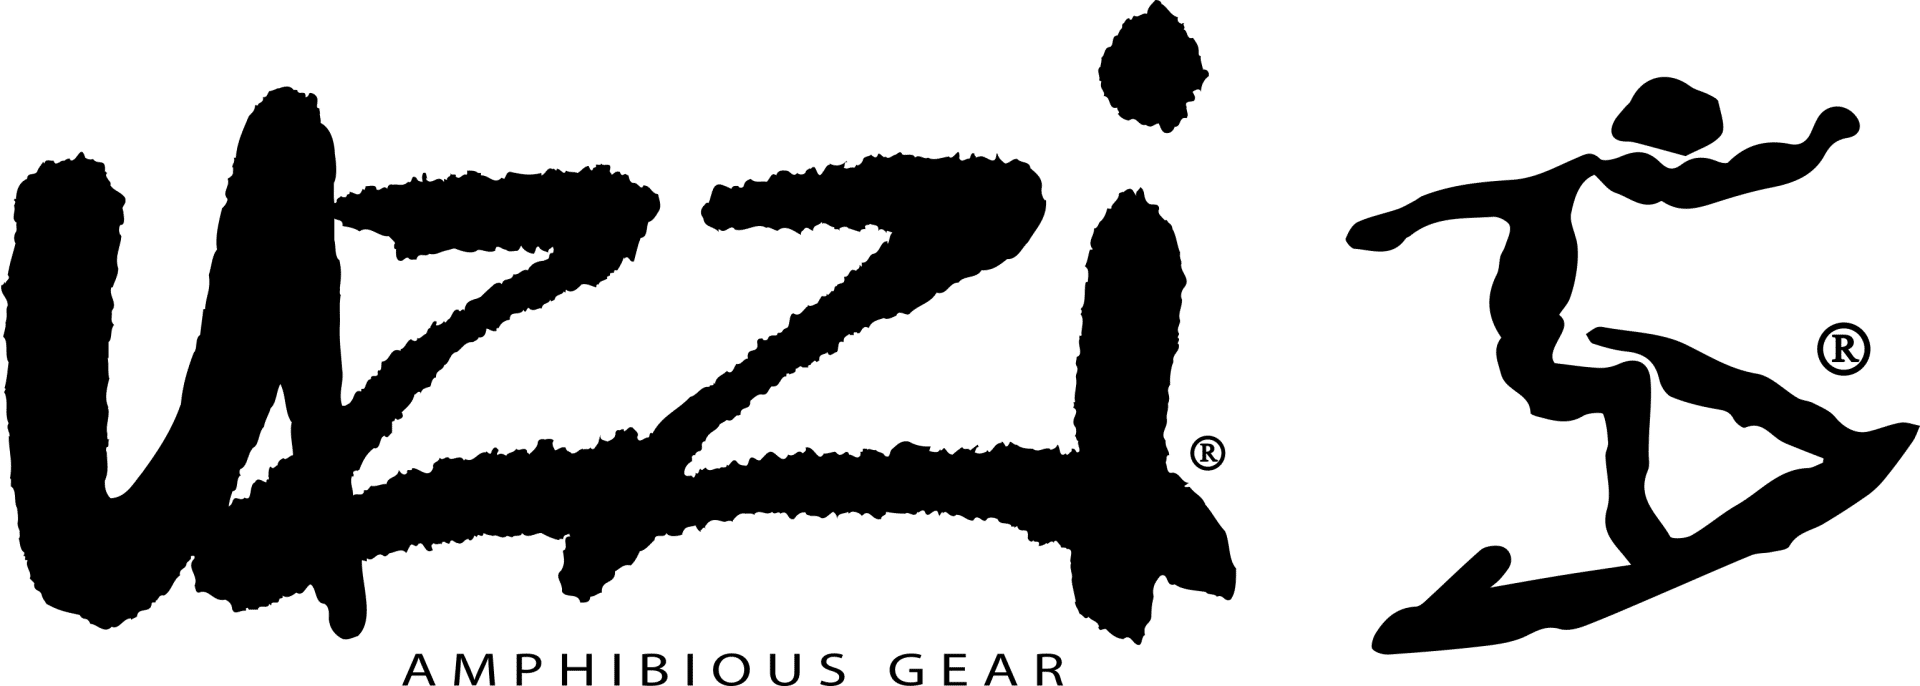 uzzi Logo Name and Surfer Dude silhouette